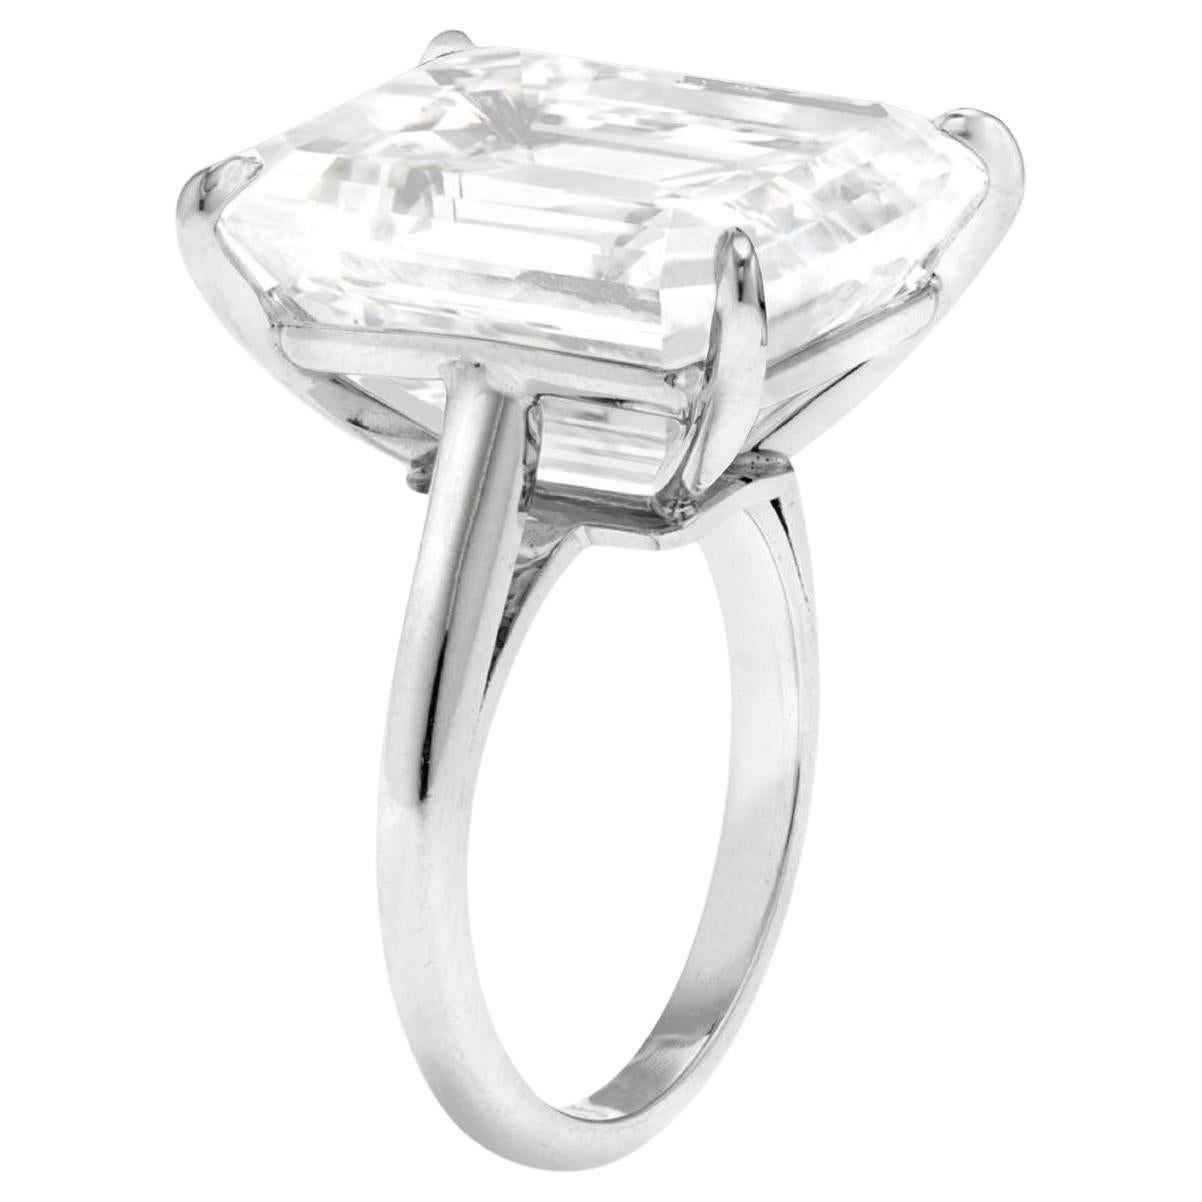 
GIA Certified 10.32 Carat Emerald Cut Diamond Platinum Ring

